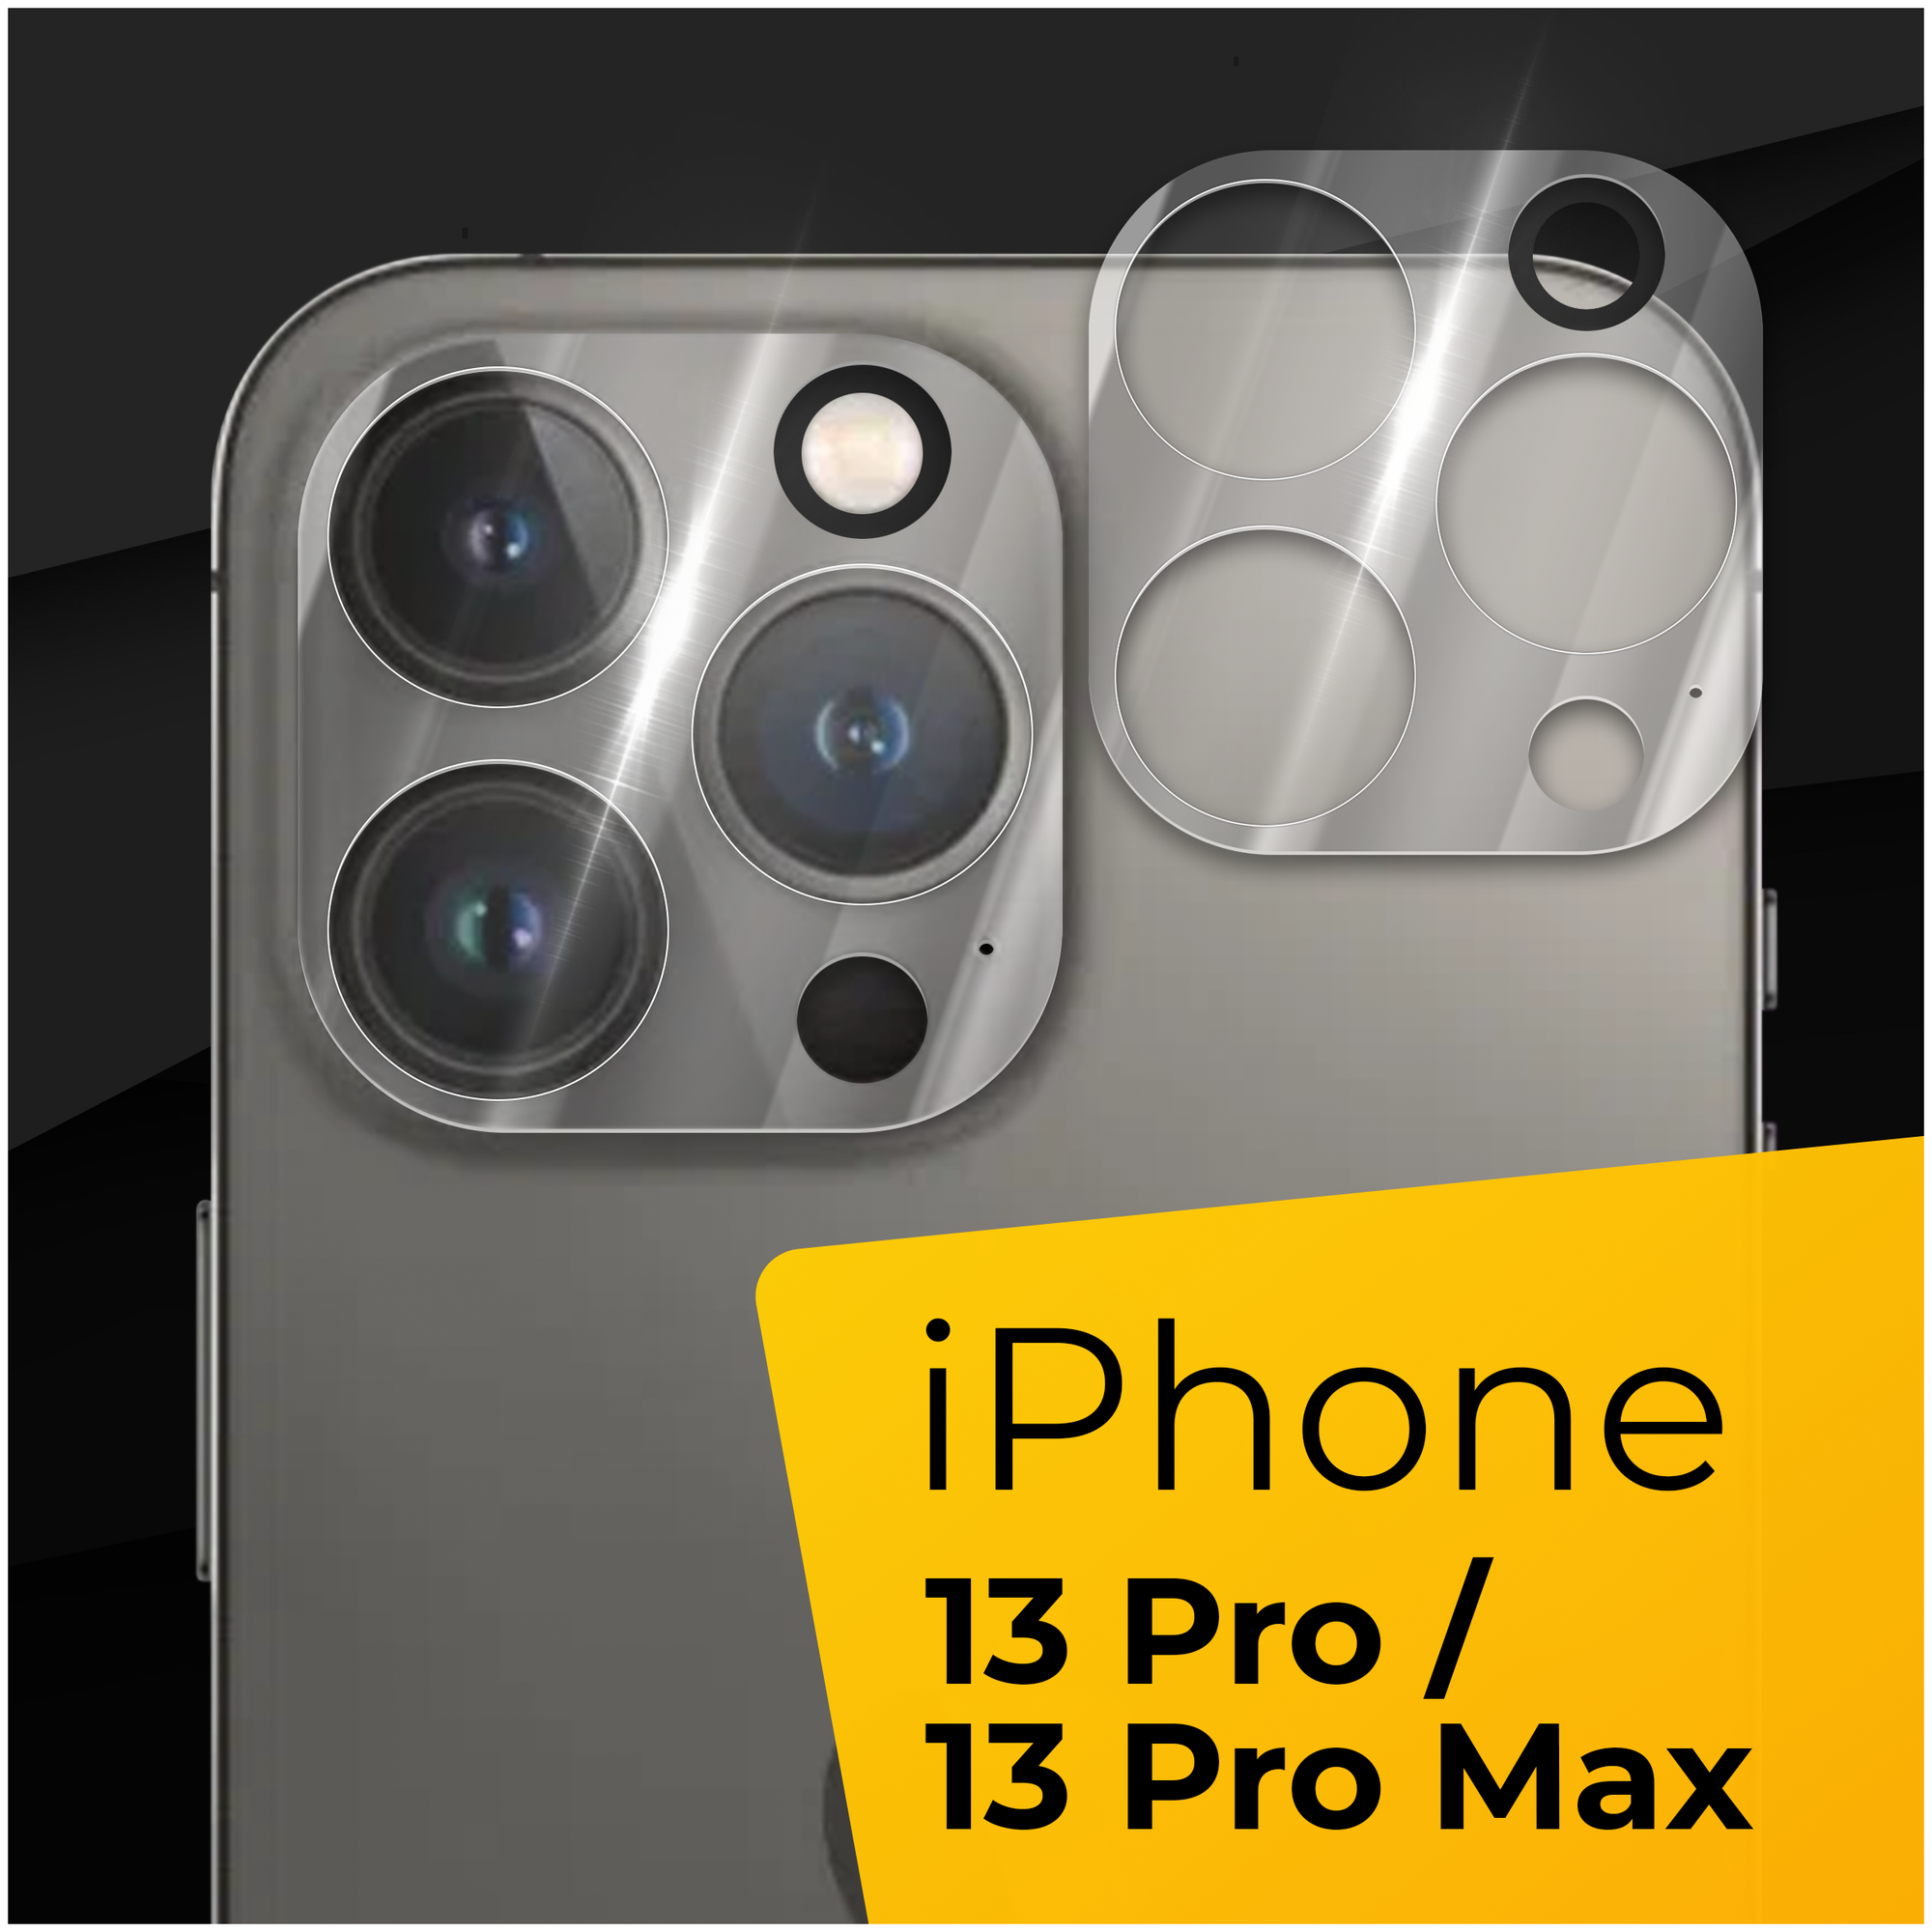 Противоударное защитное стекло для камеры телефона Apple iPhone 13 Pro и 13 Pro Max / Прозрачное стекло на камеру Эпл Айфон 13 Про и 13 Про Макс